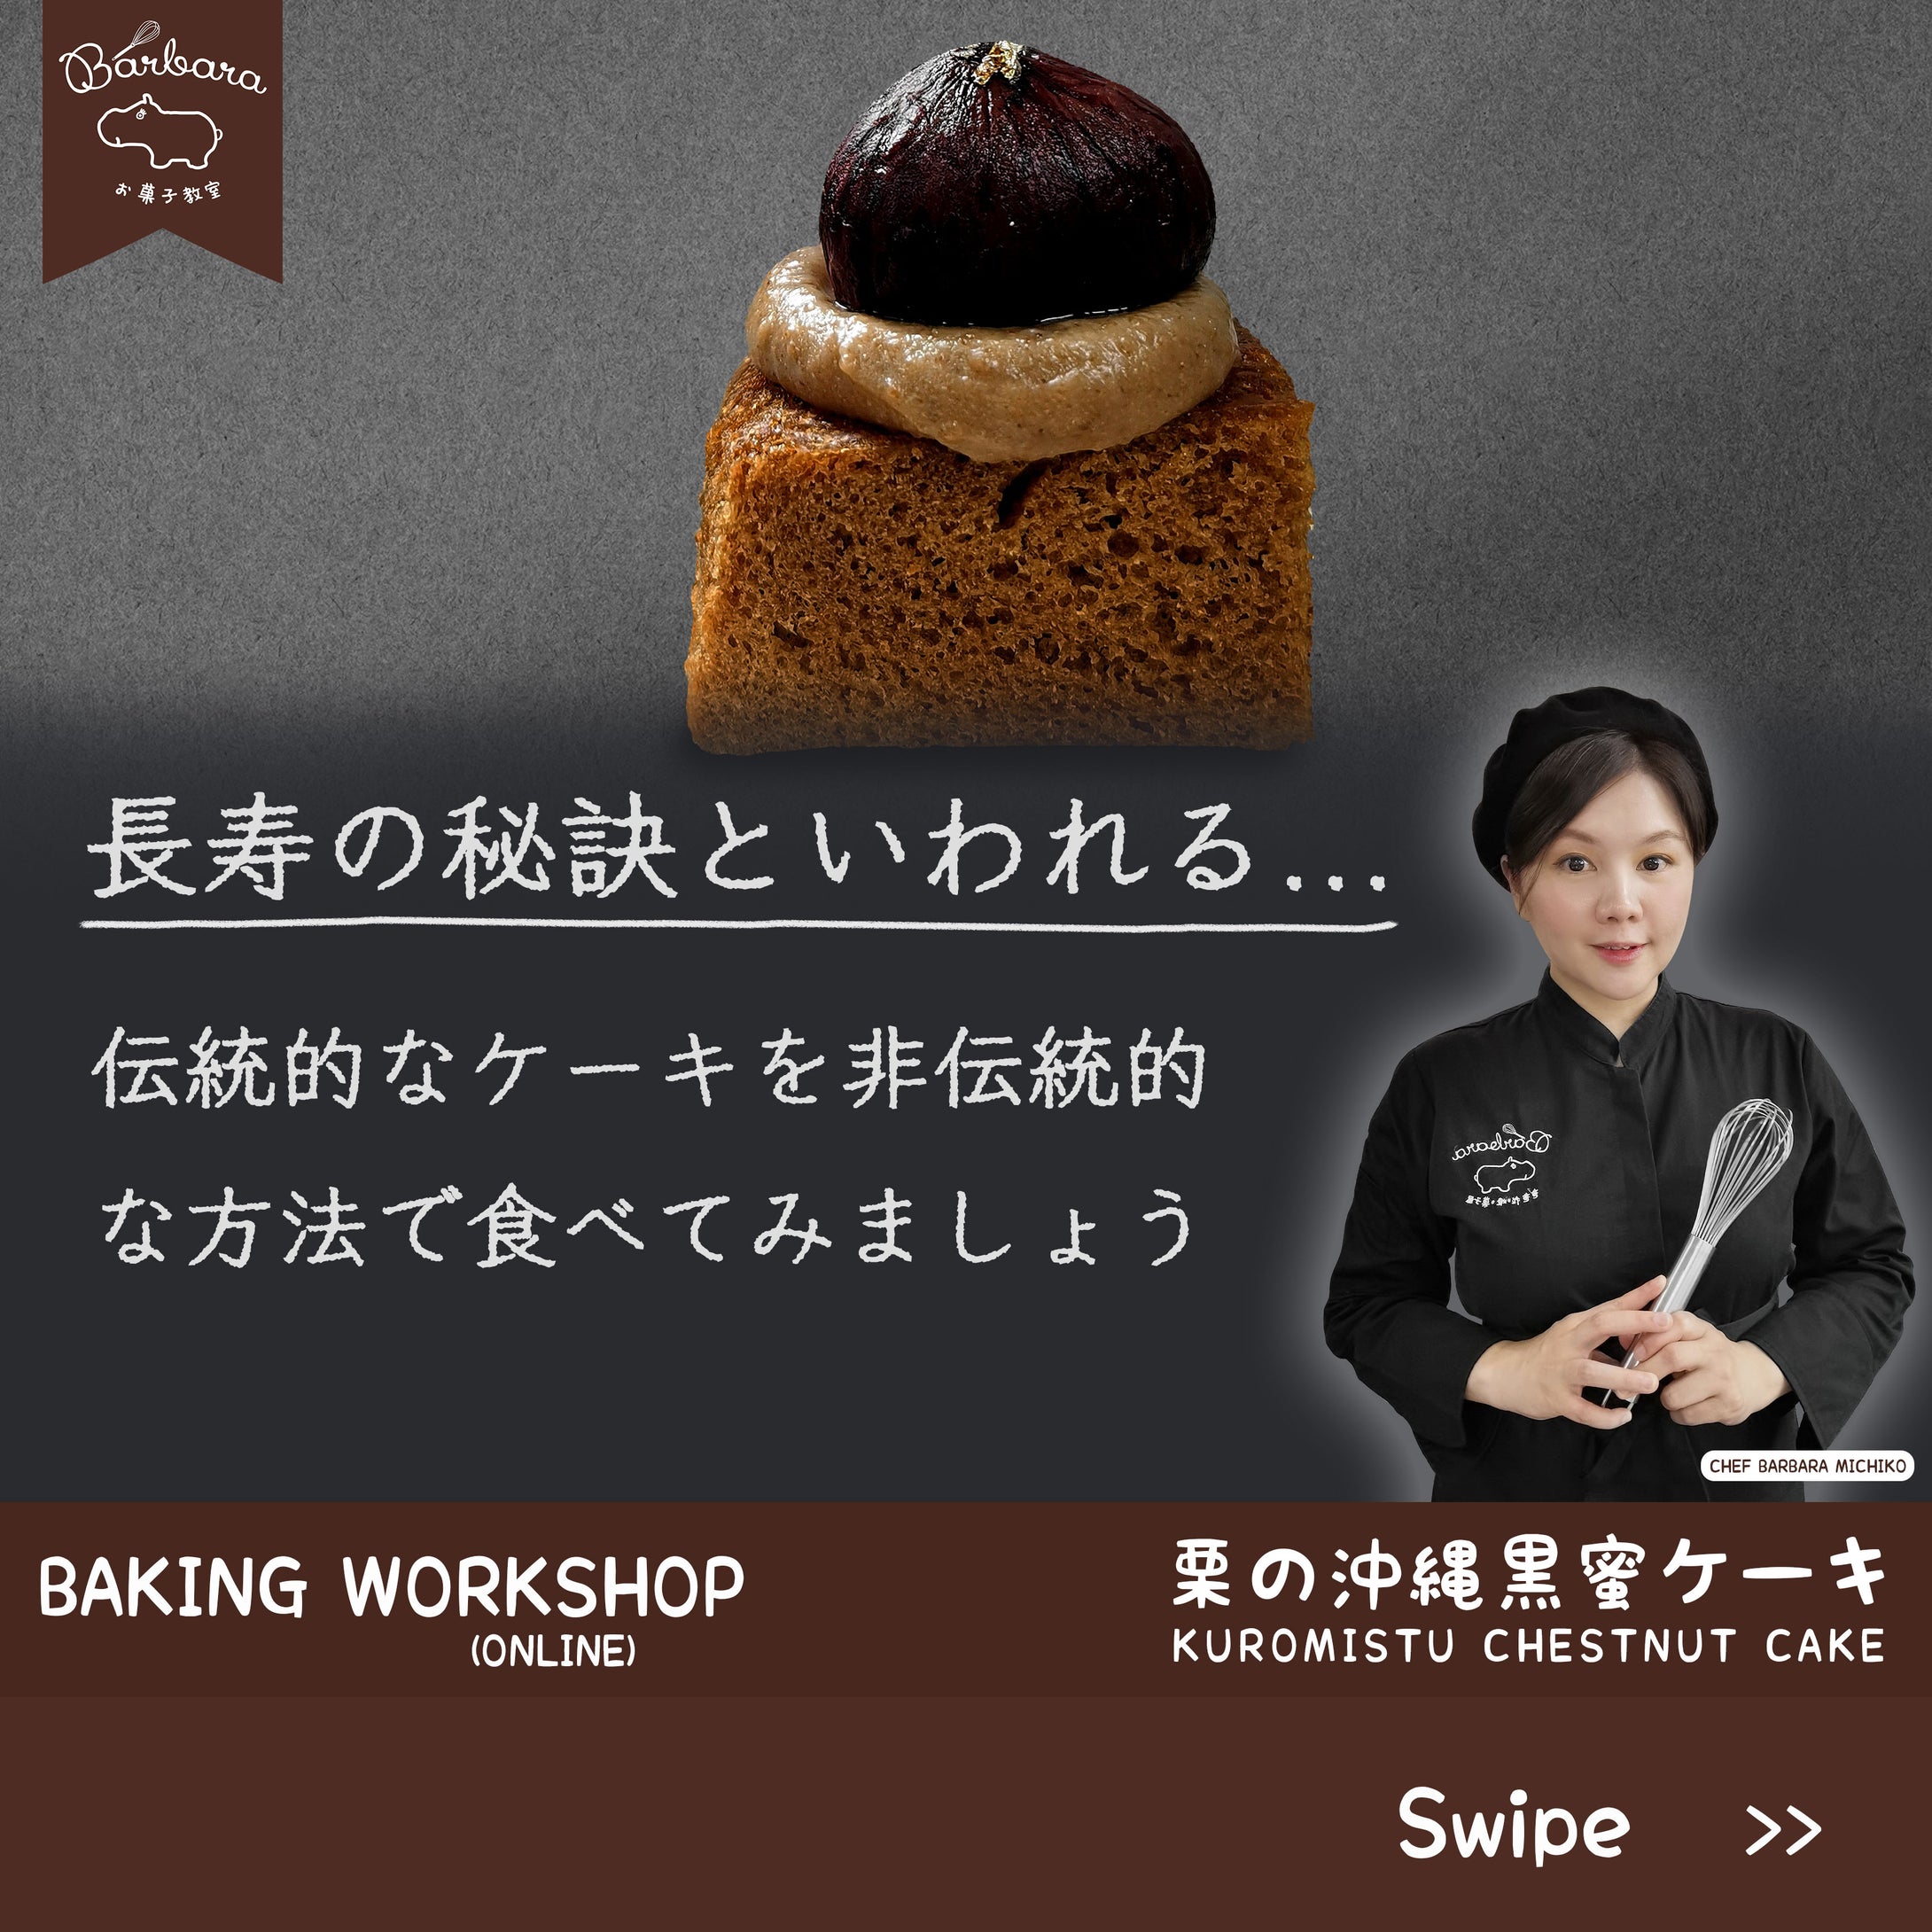 【栗の沖縄黒蜜ケーキ】
Kuromistu Chestnut Cake Online Class